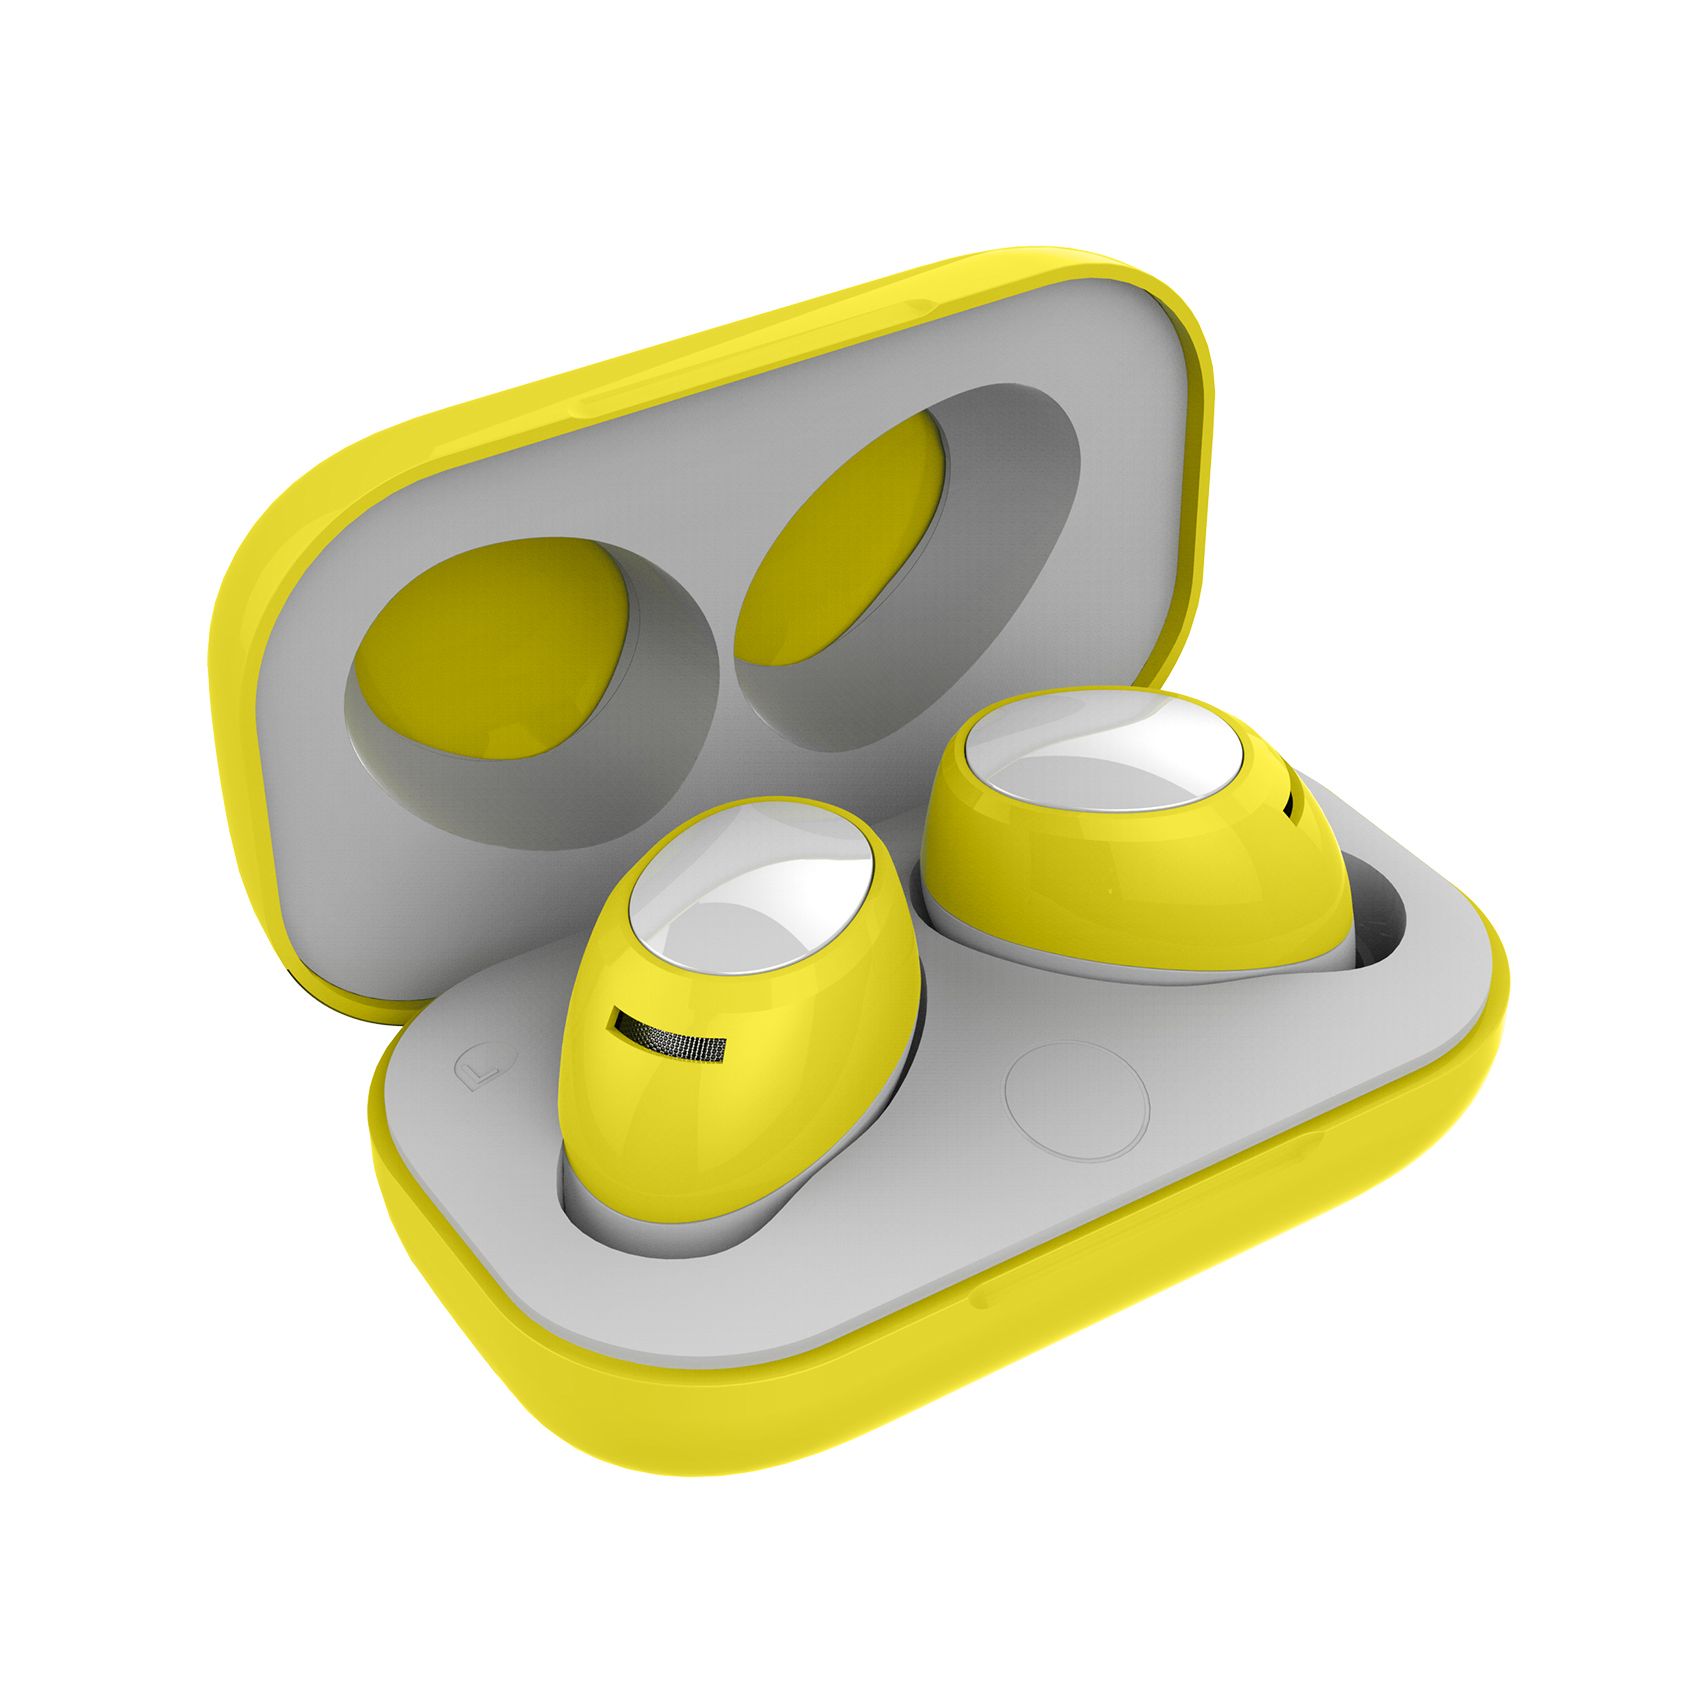 True Wireless sluchátka CELLY Twins Air, žlutá